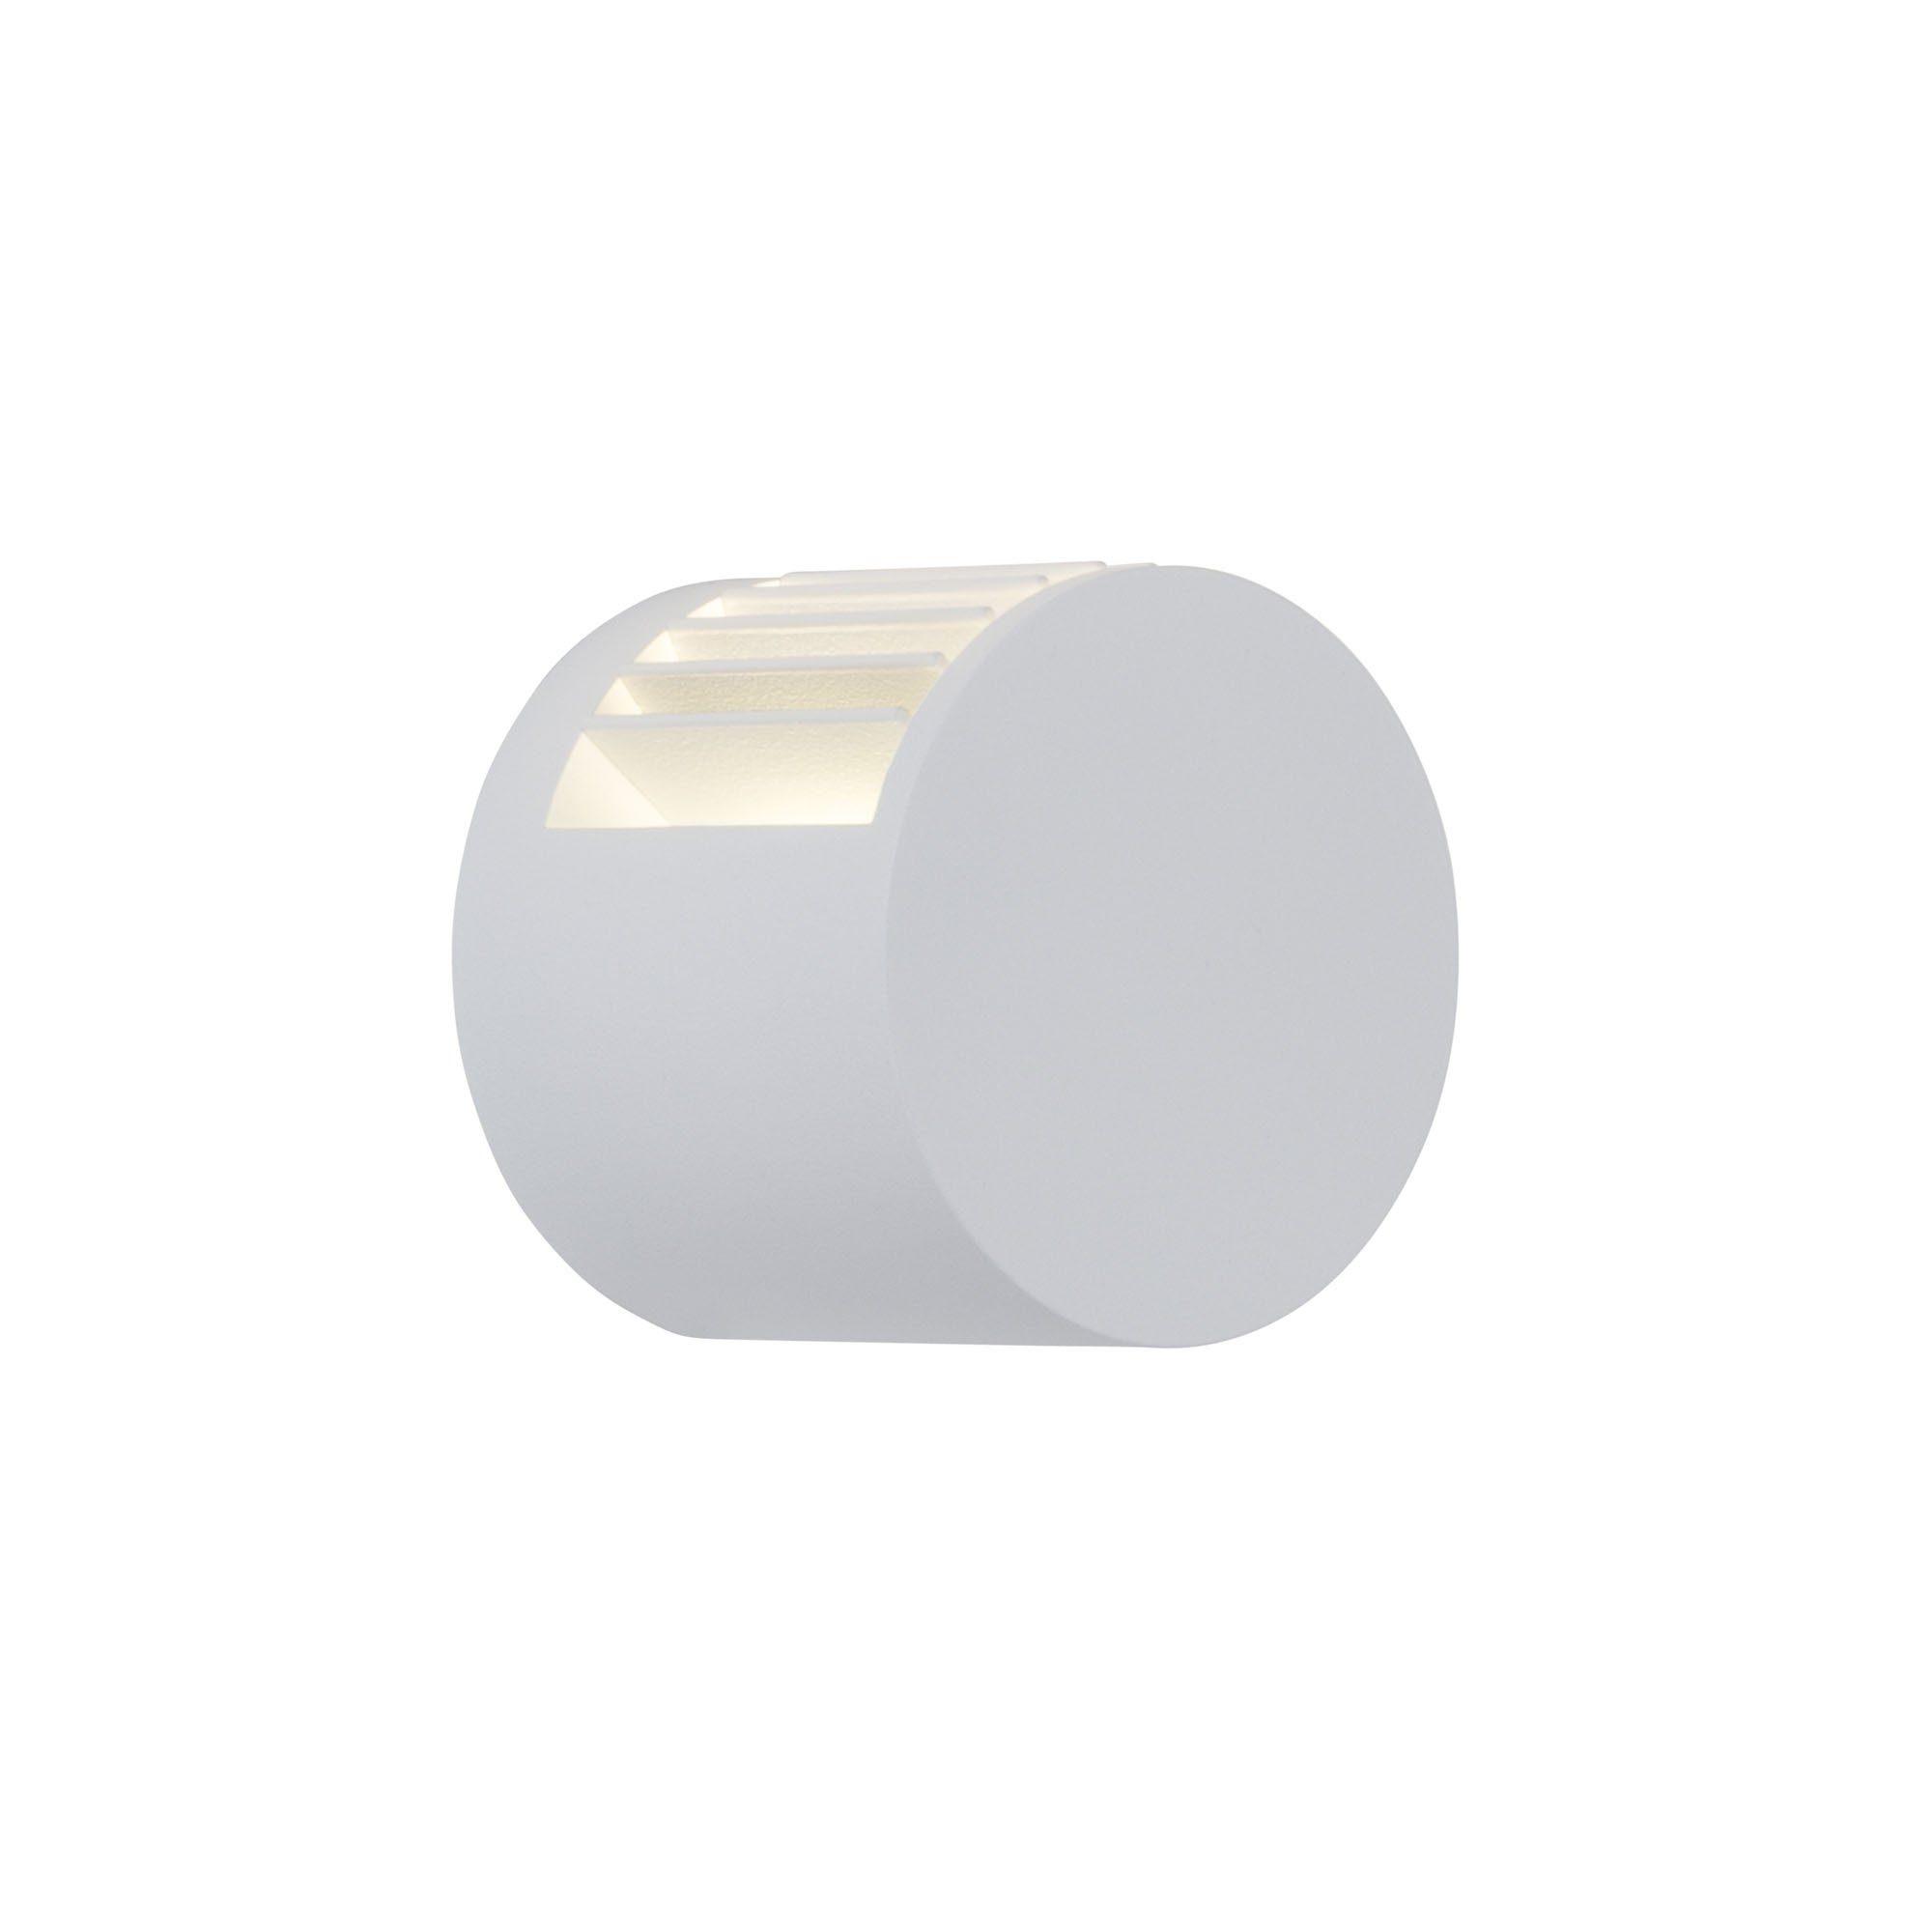 AEG LED Wandleuchte Judon, LED wechselbar, Warmweiß, Ø 7,9 cm, 310 lm, warmweiß, IP65, Alu-Druckguss/Glas, weiß | Wandleuchten